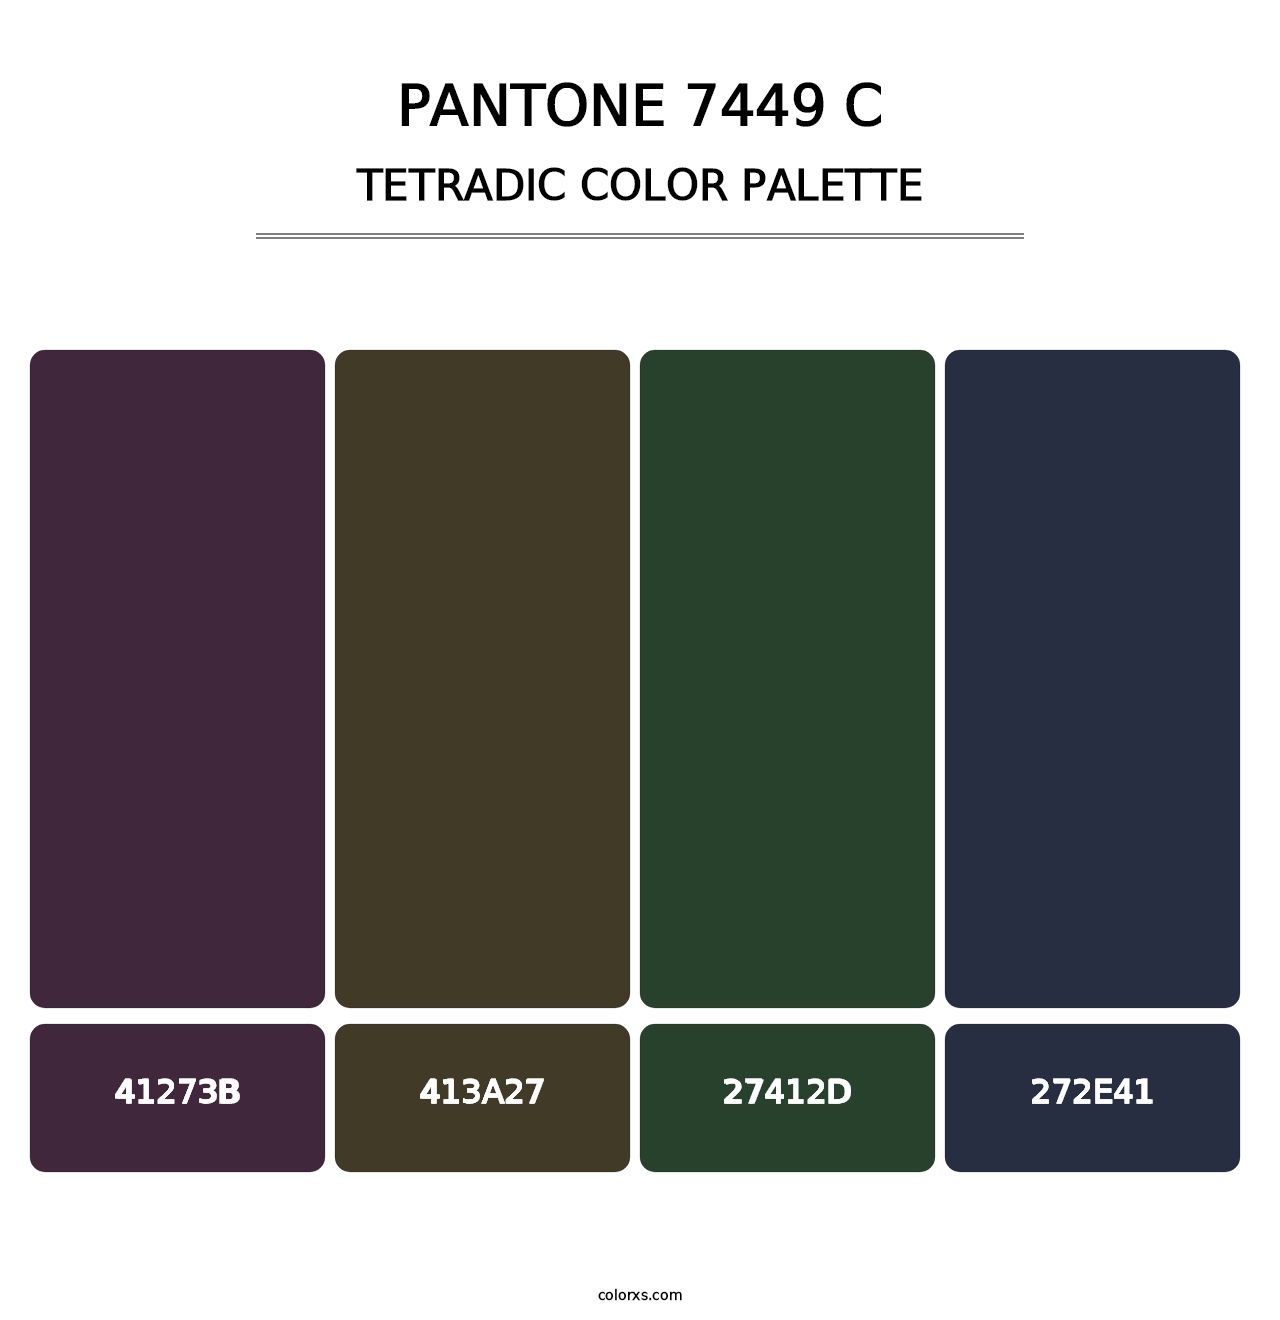 PANTONE 7449 C - Tetradic Color Palette